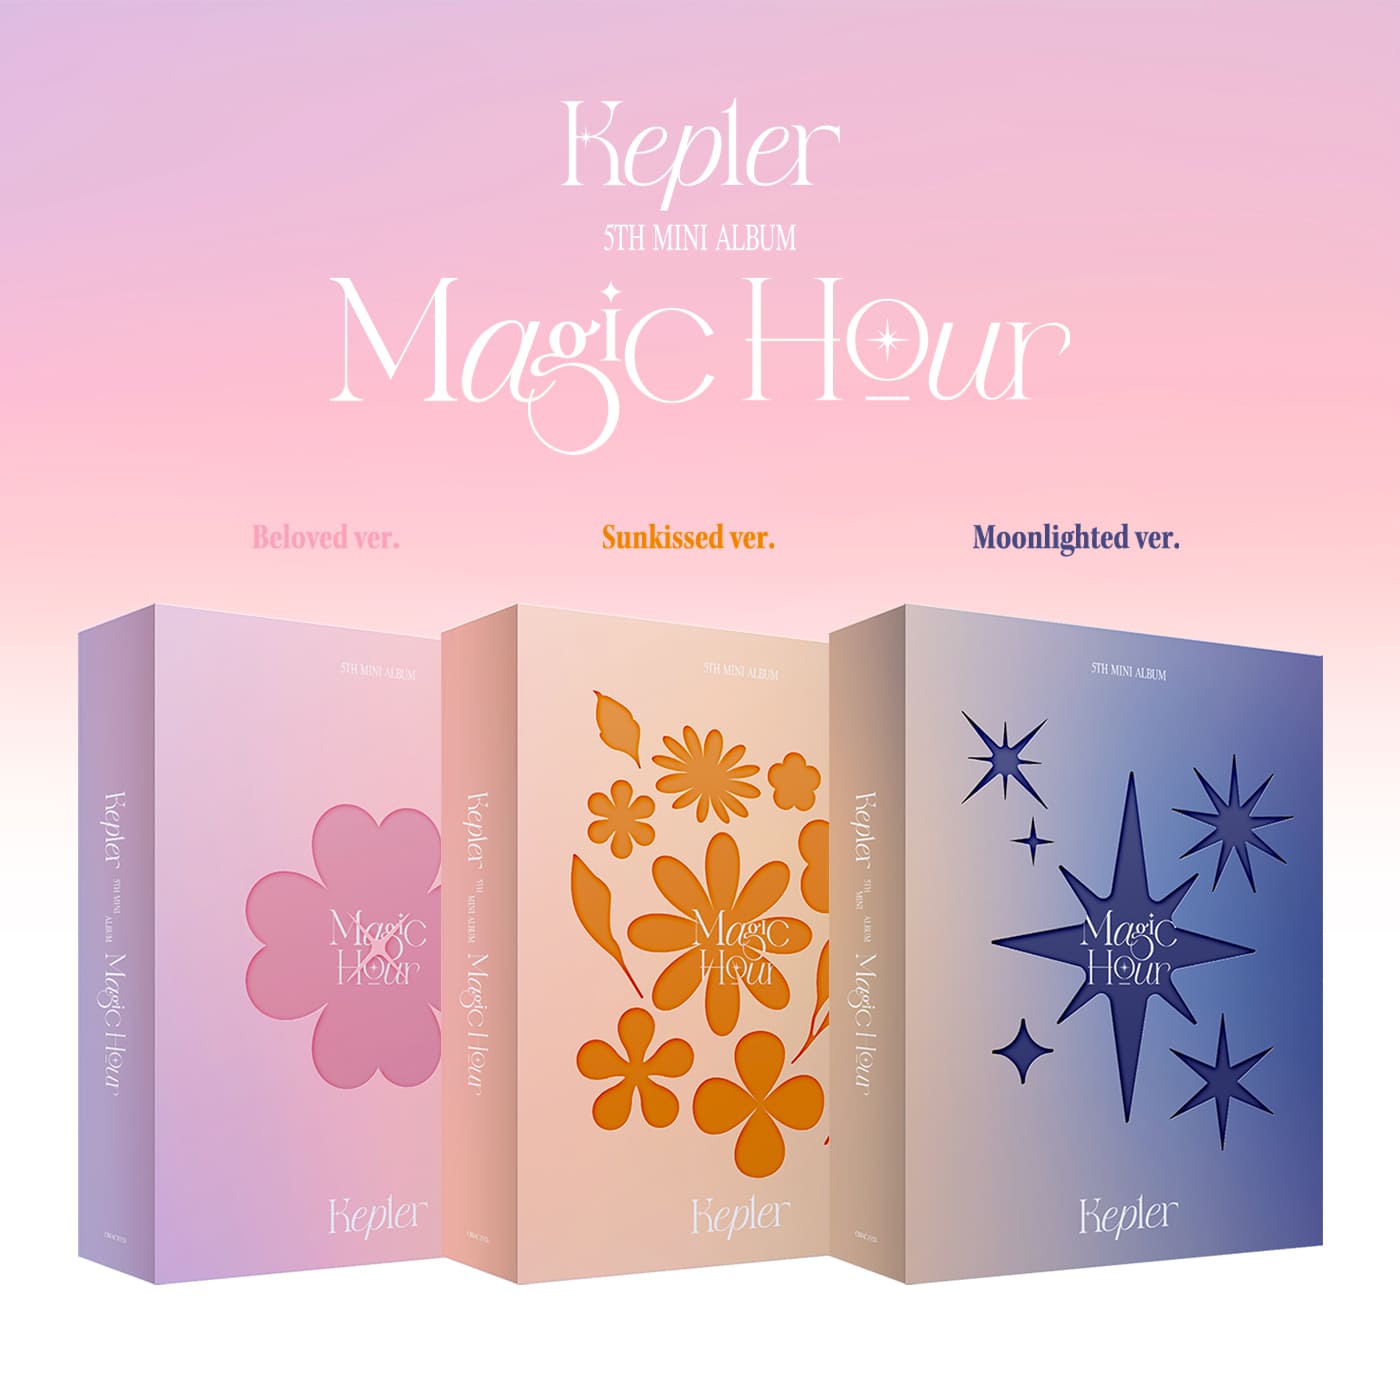 KEP1ER | Magic Hour (5th Mini Album) | PRE-ORDER